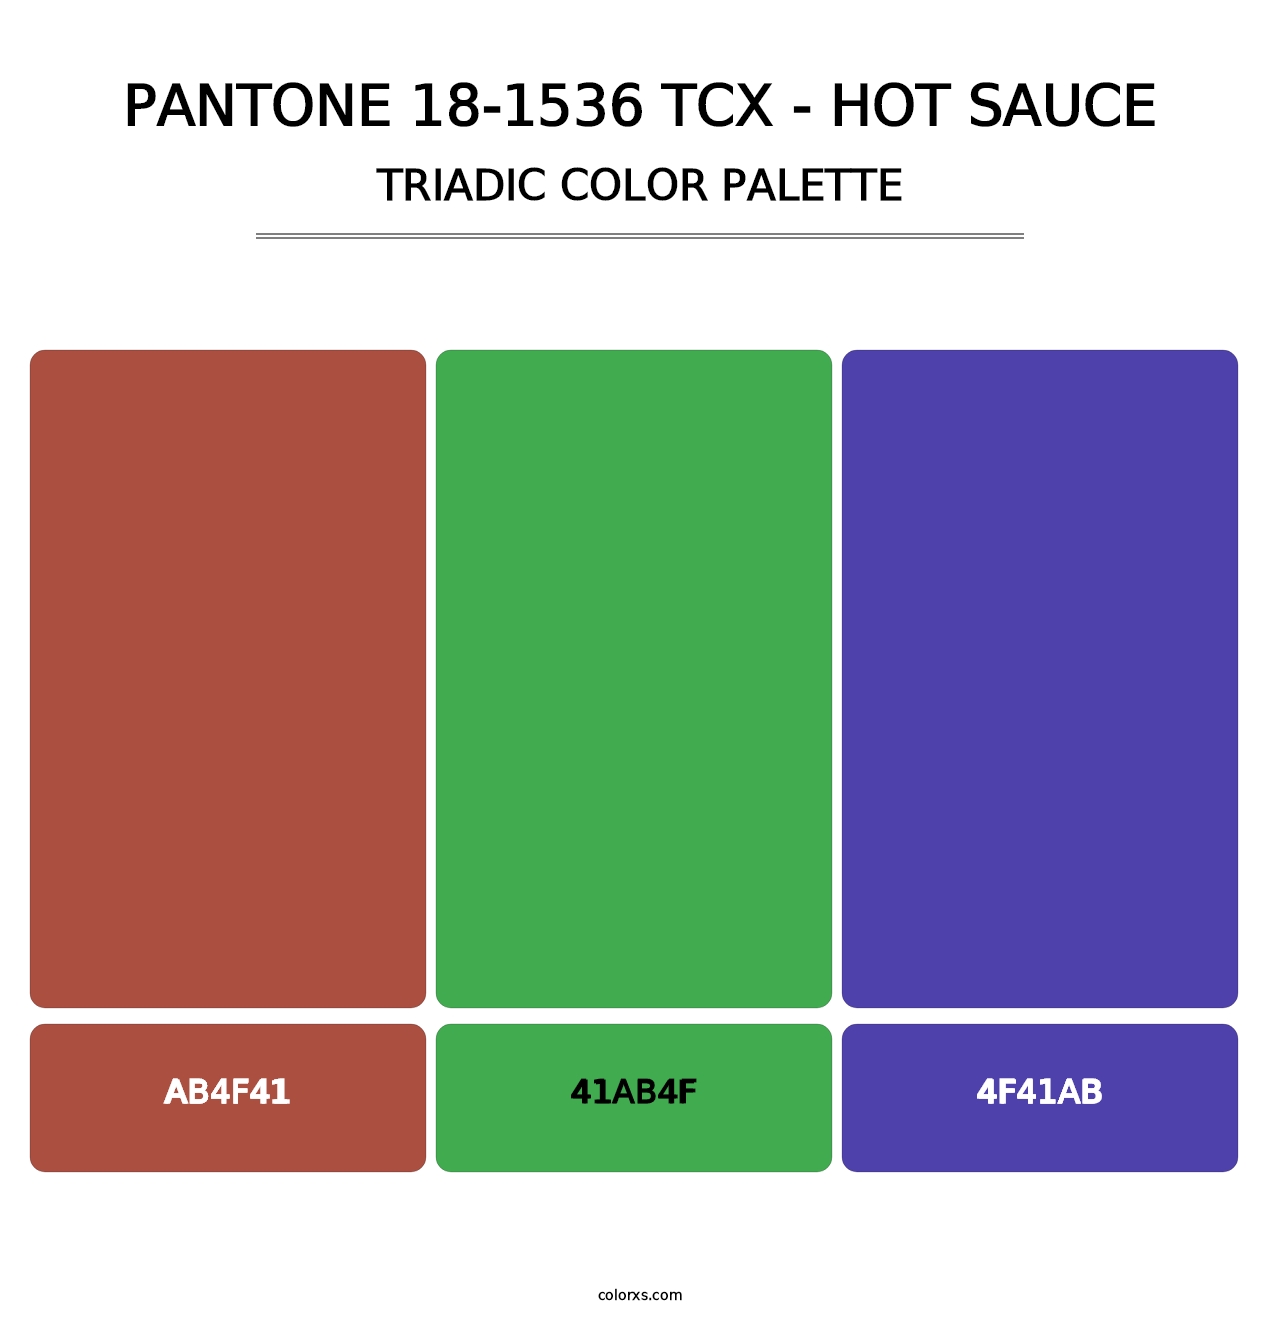 PANTONE 18-1536 TCX - Hot Sauce - Triadic Color Palette